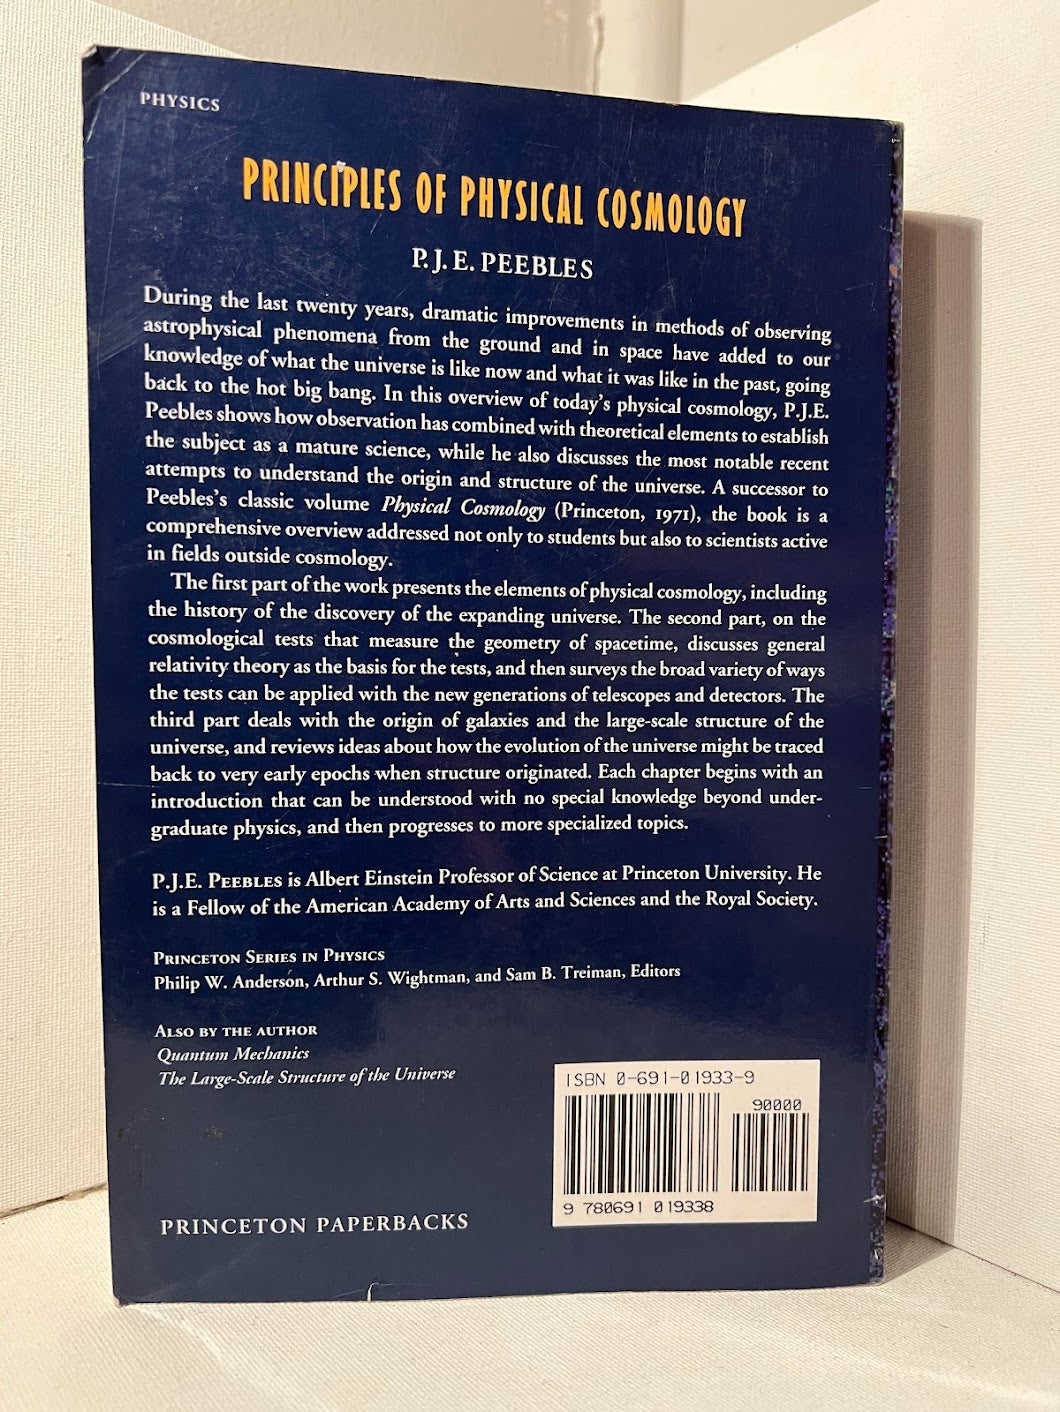 Principles of Physical Cosmology by P.J. E. Peebles